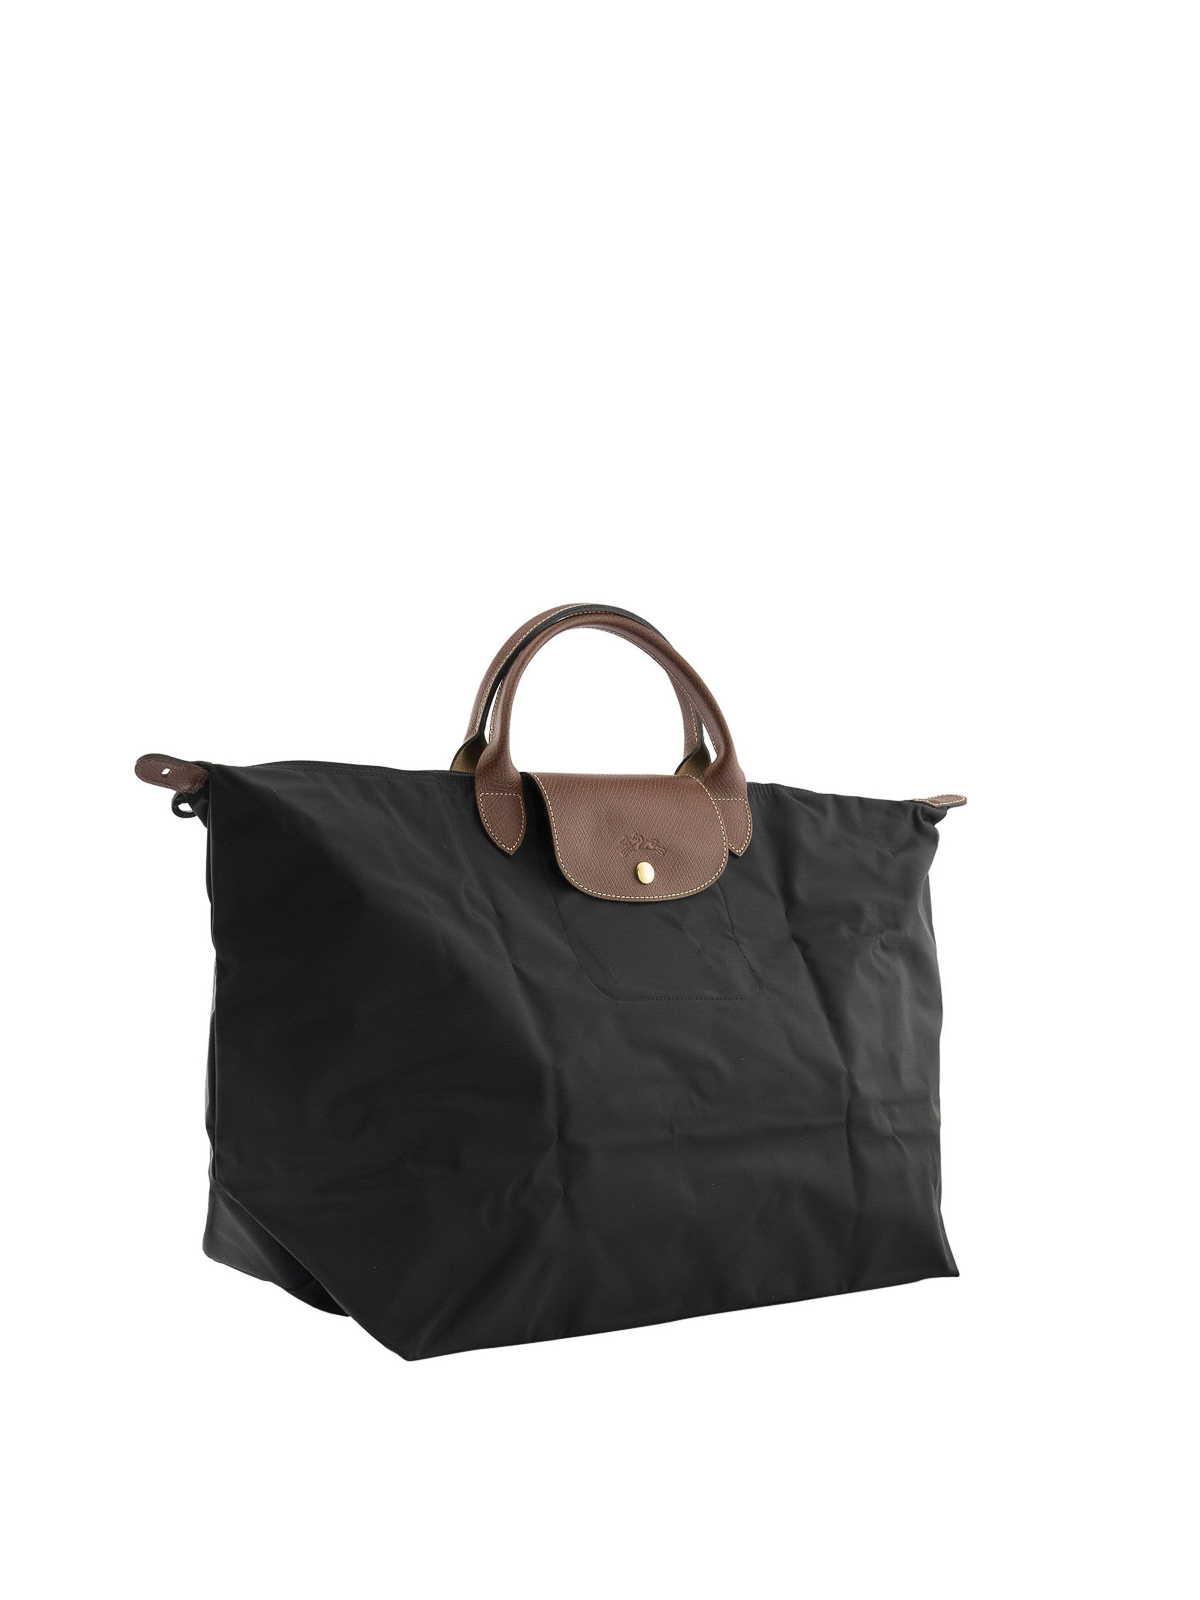 bags Longchamp - Le travel bag - 1624089001